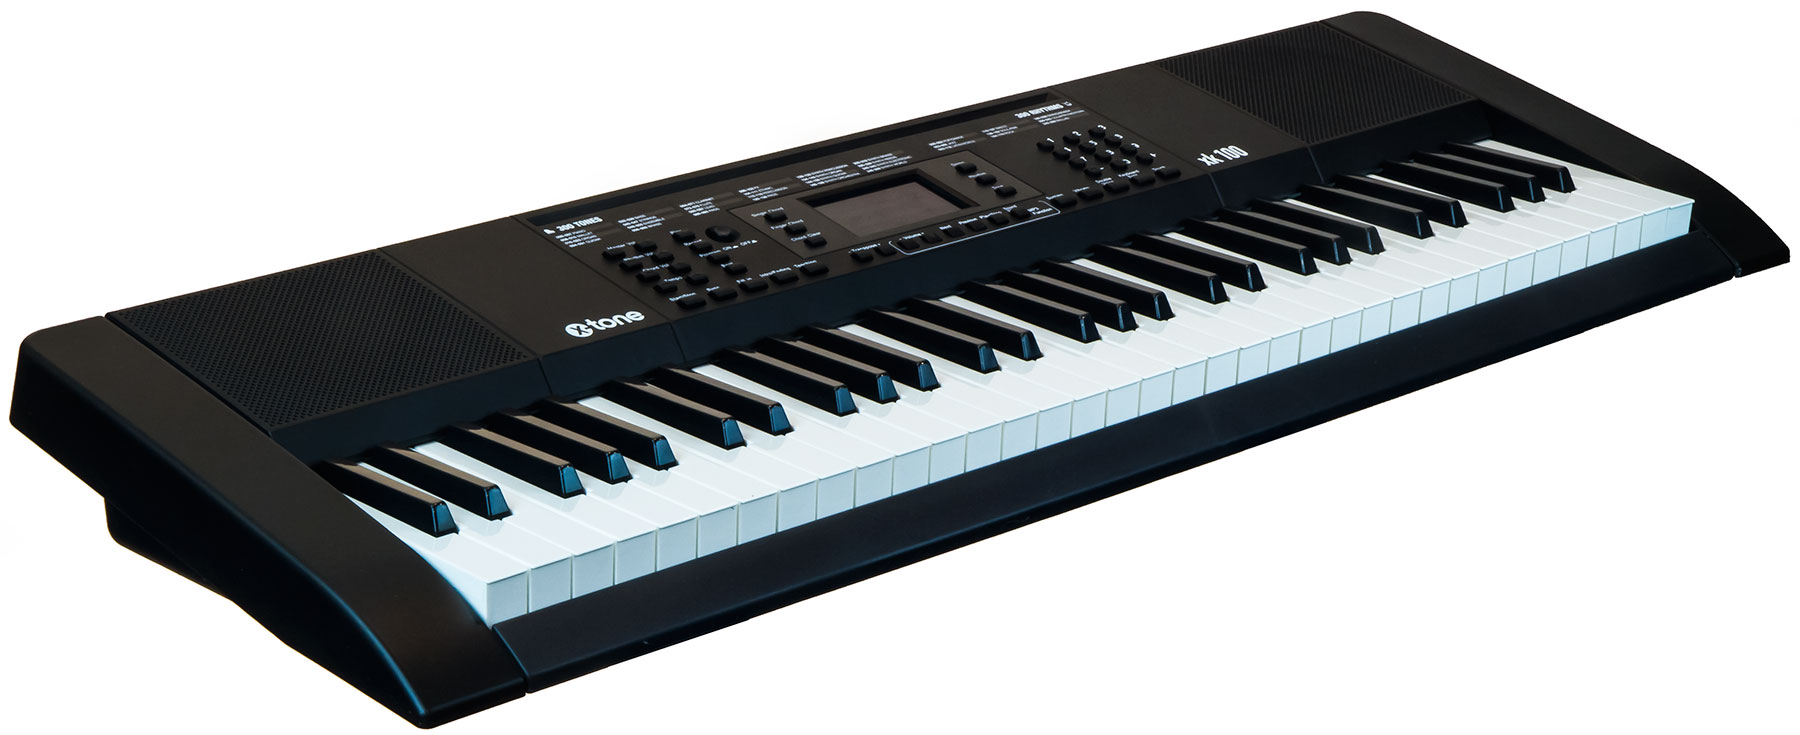 X-tone, Clavier X-tone, Keyboard, clavier arrangeur